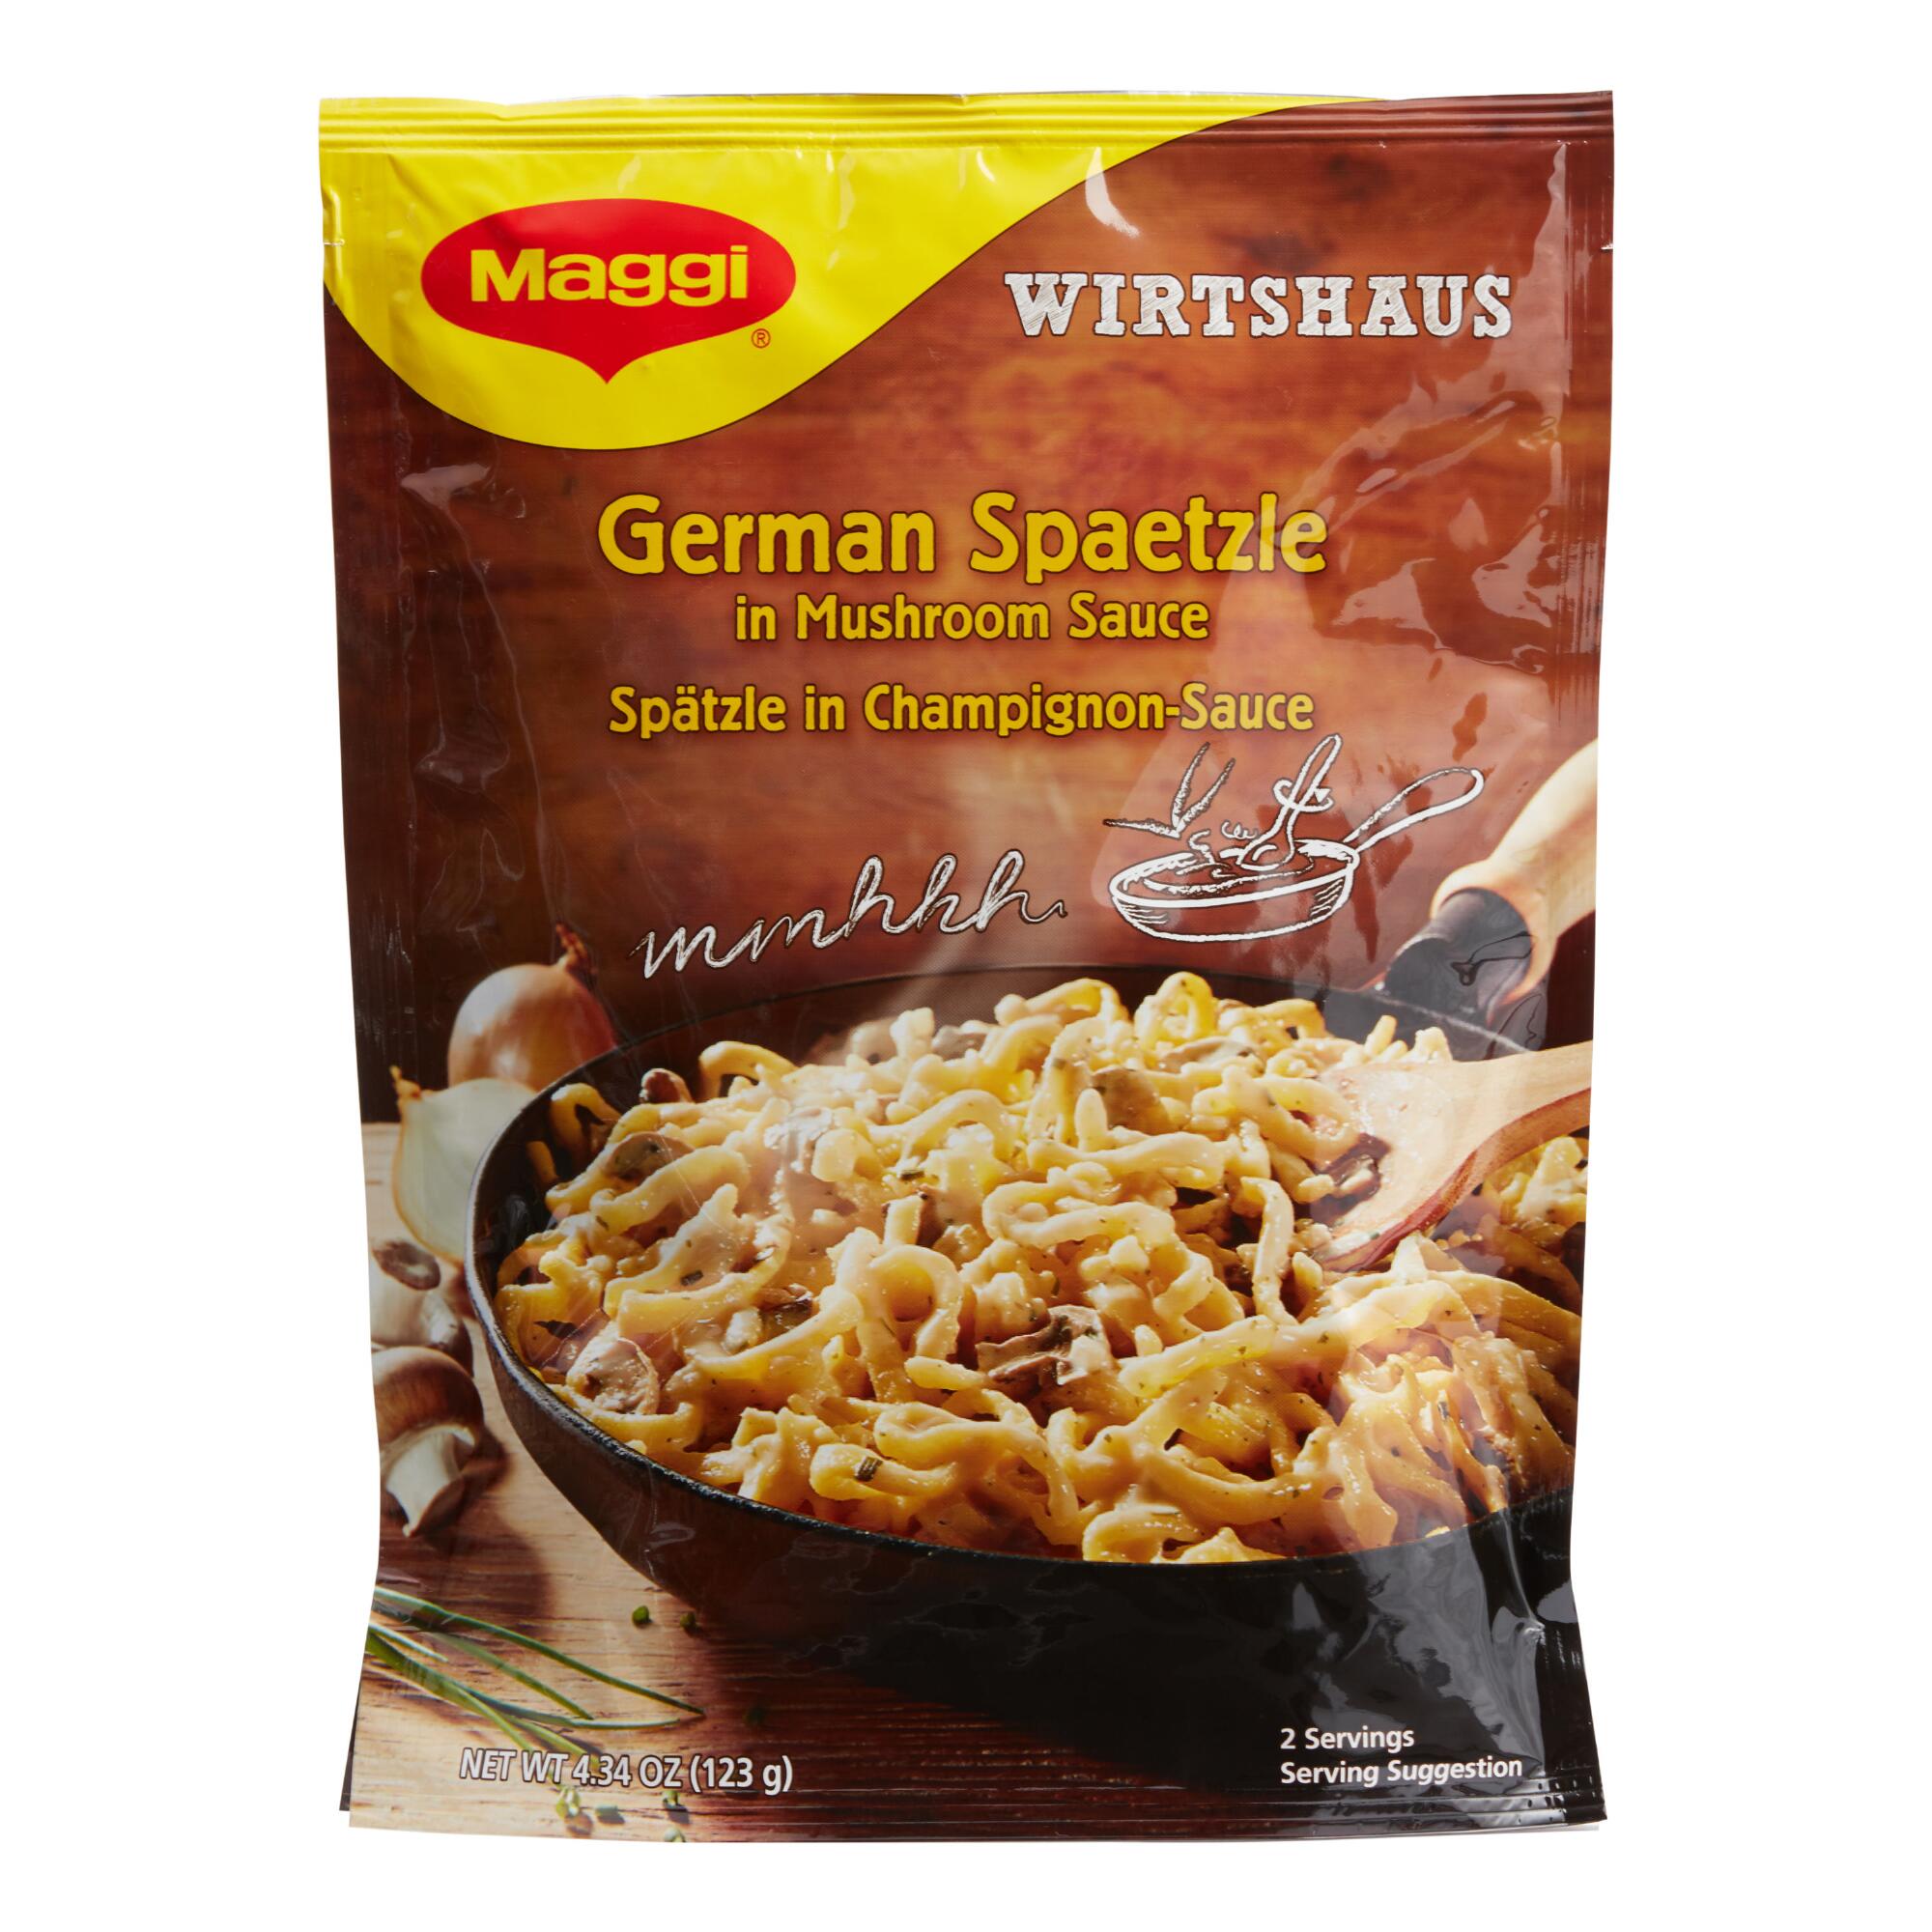 Maggi German Spaetzle in Mushroom Sauce by World Market